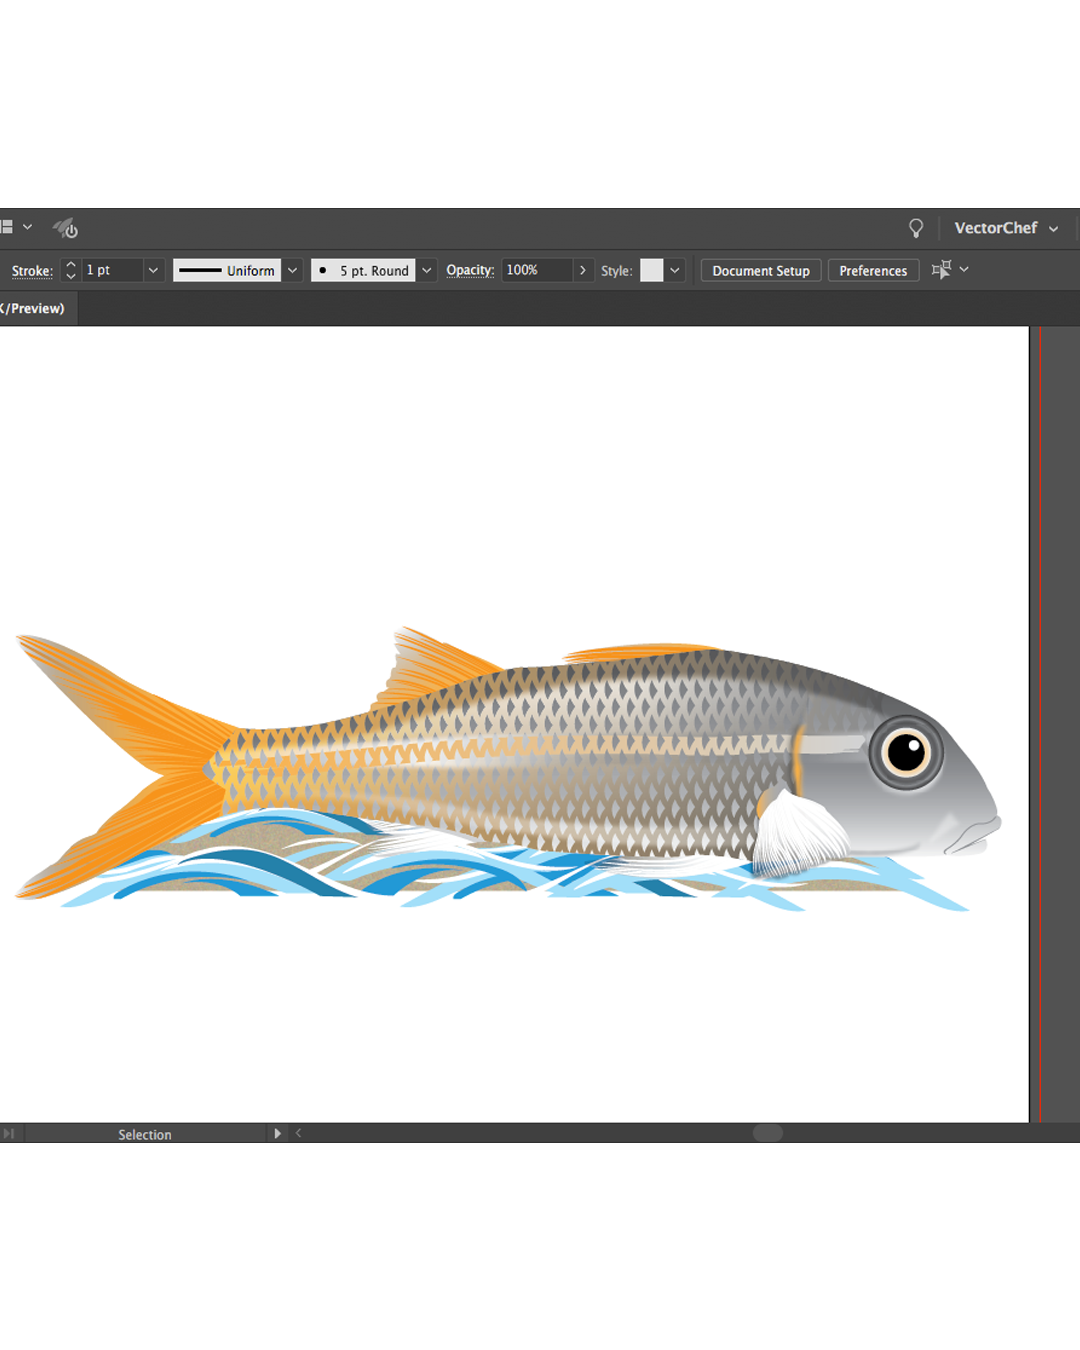 oama goatfish vectorchef fishing Apparel Design vector